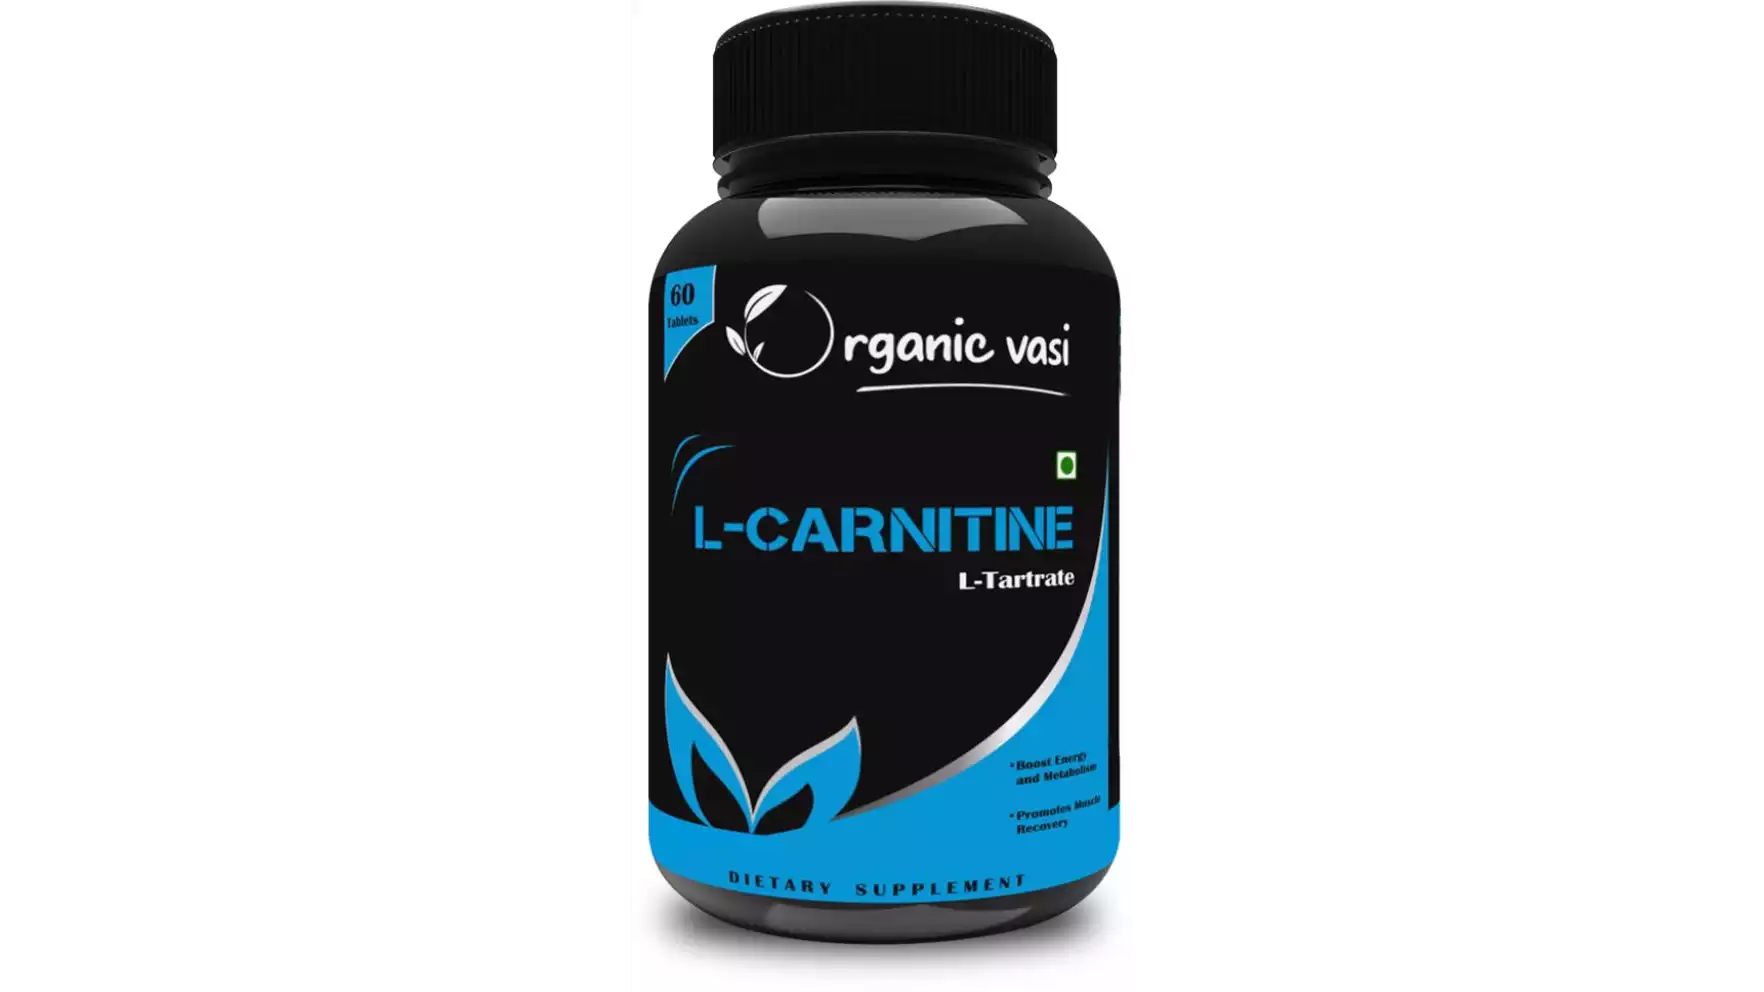 Organic Vasi L Carnitine Supplement (60tab)